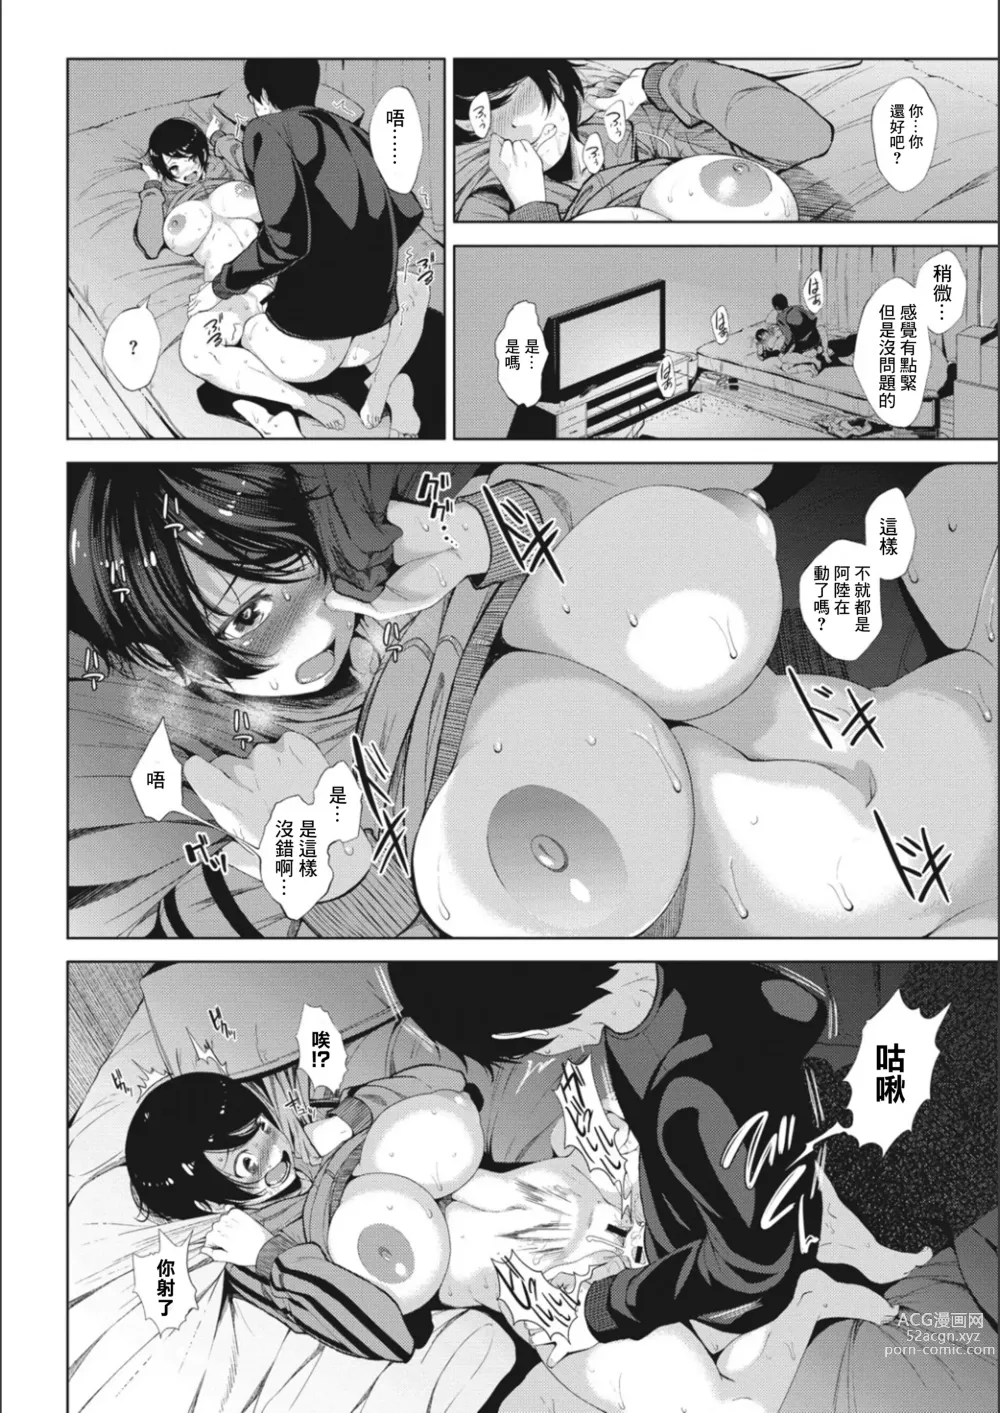 Page 16 of manga New Game